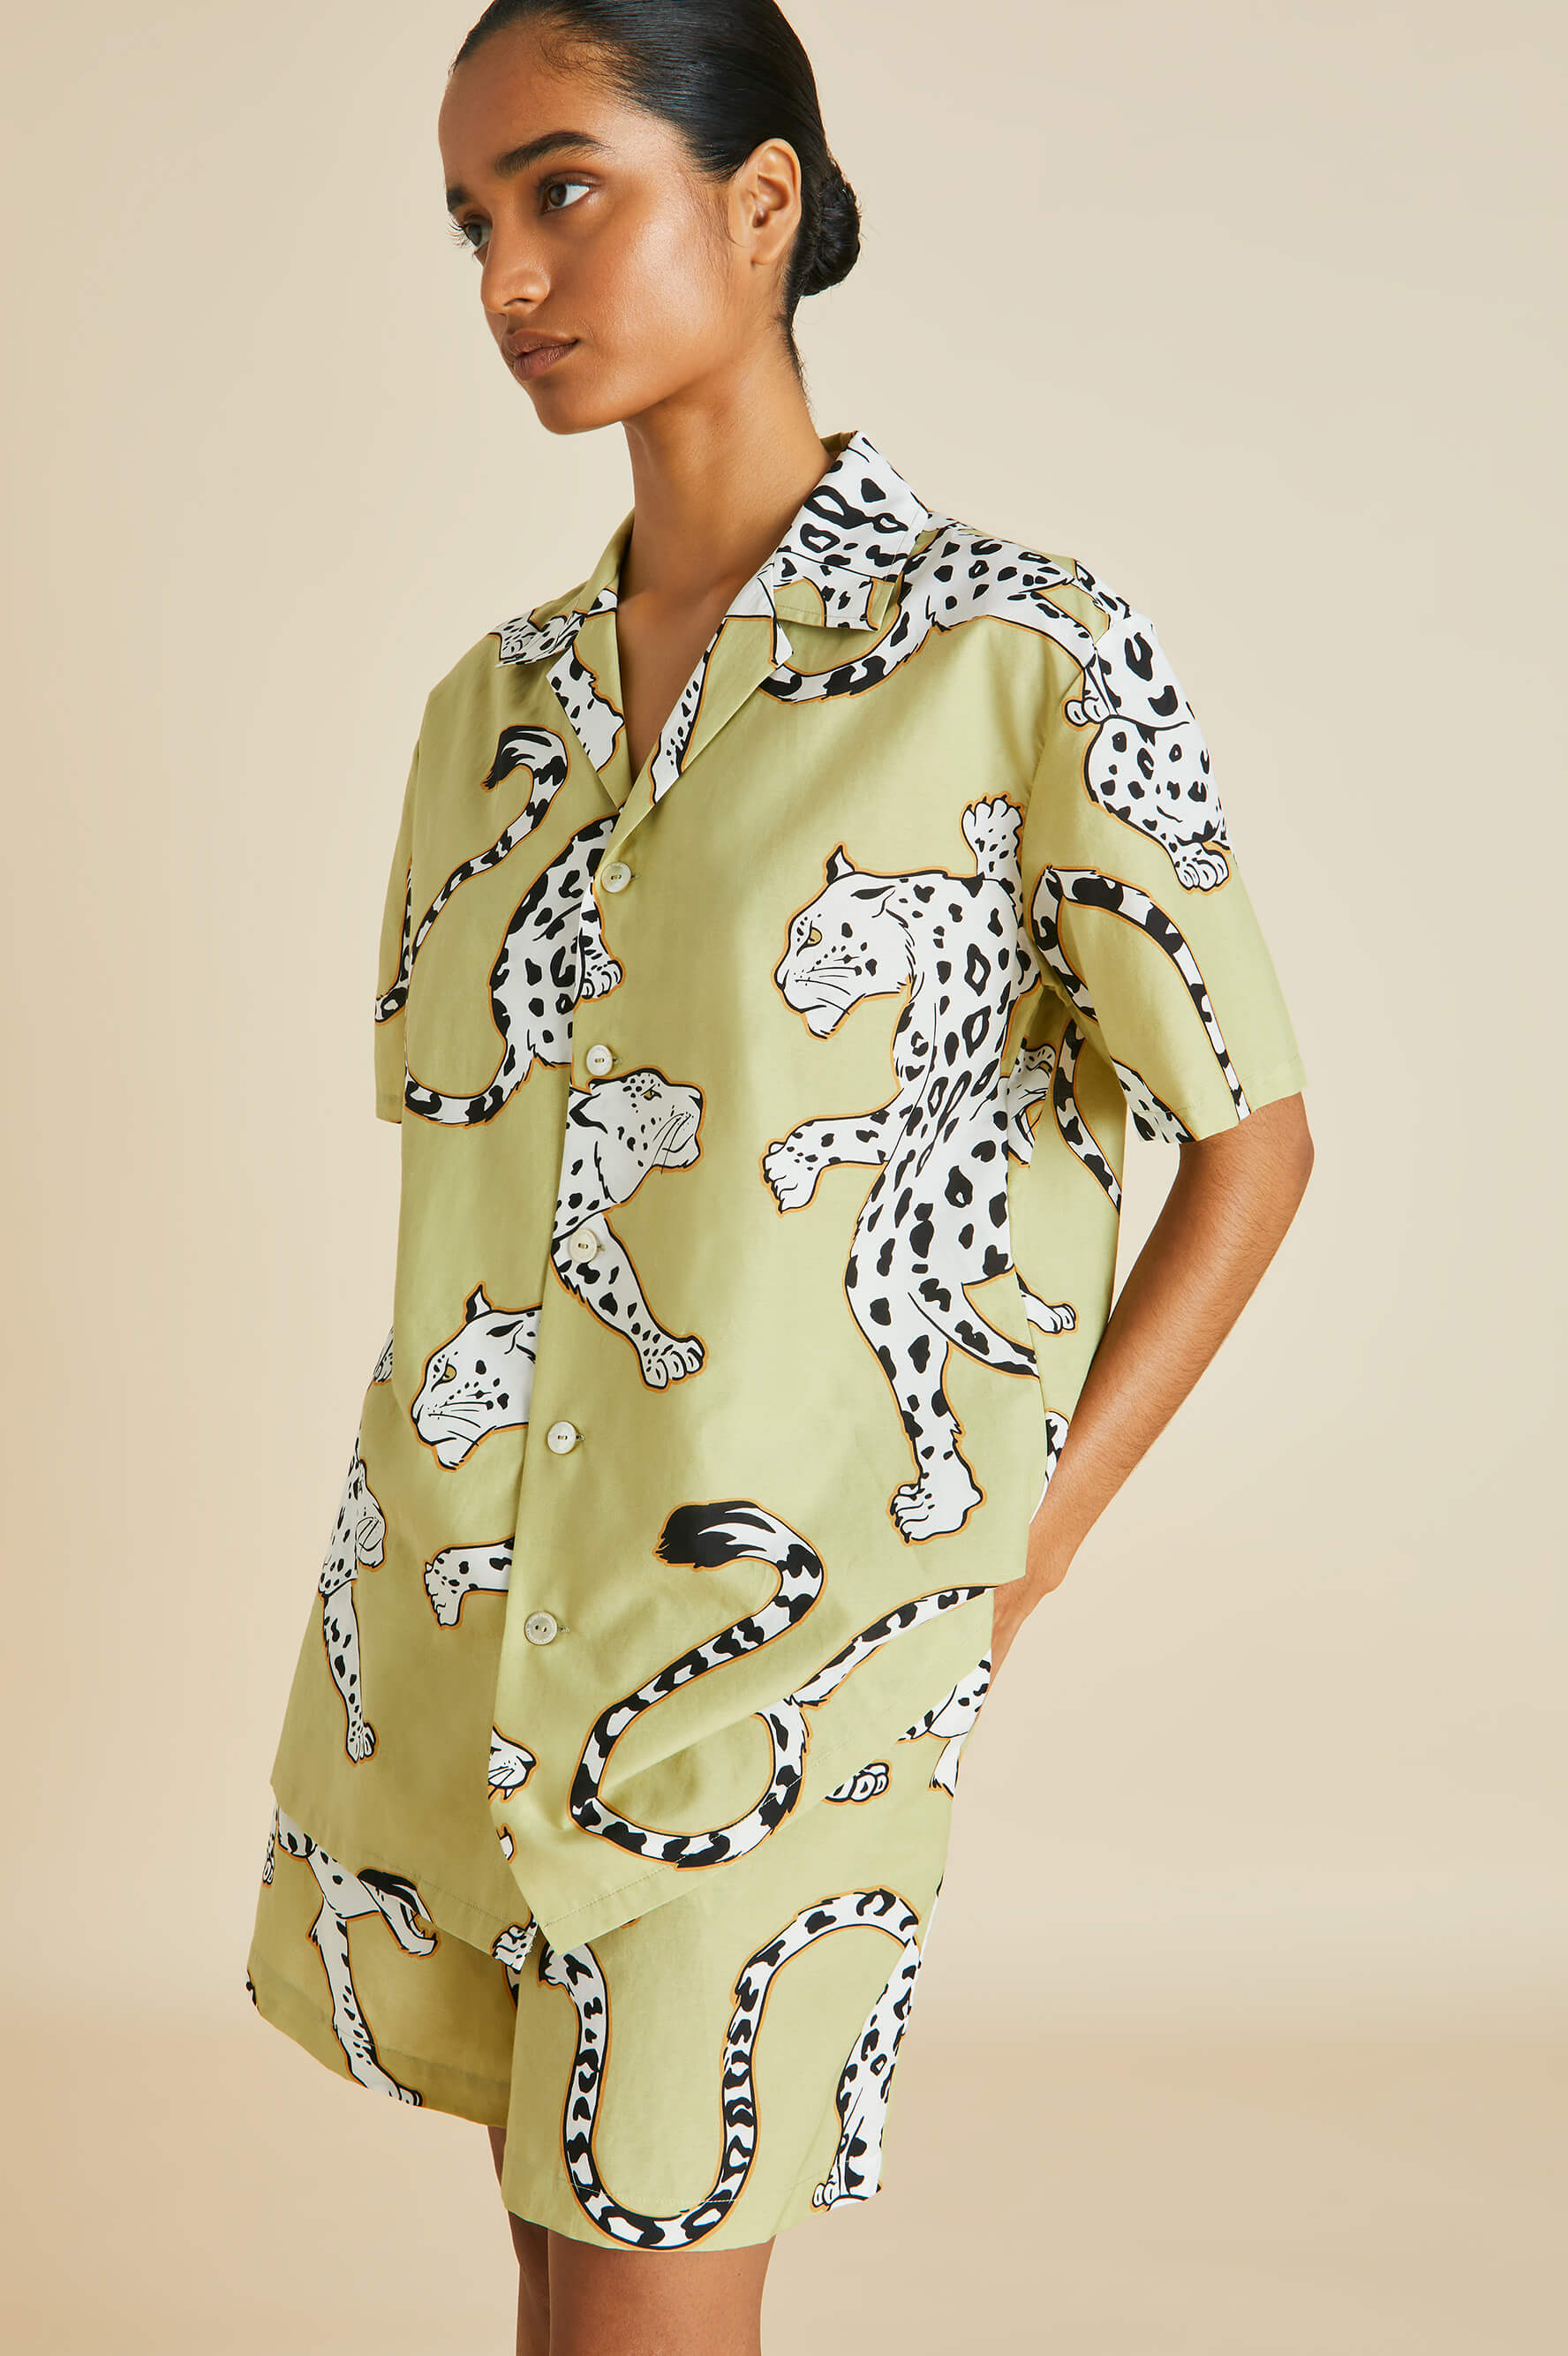 Feel The Energy Emerald Green Satin Leopard Pajama Set – Shop the Mint